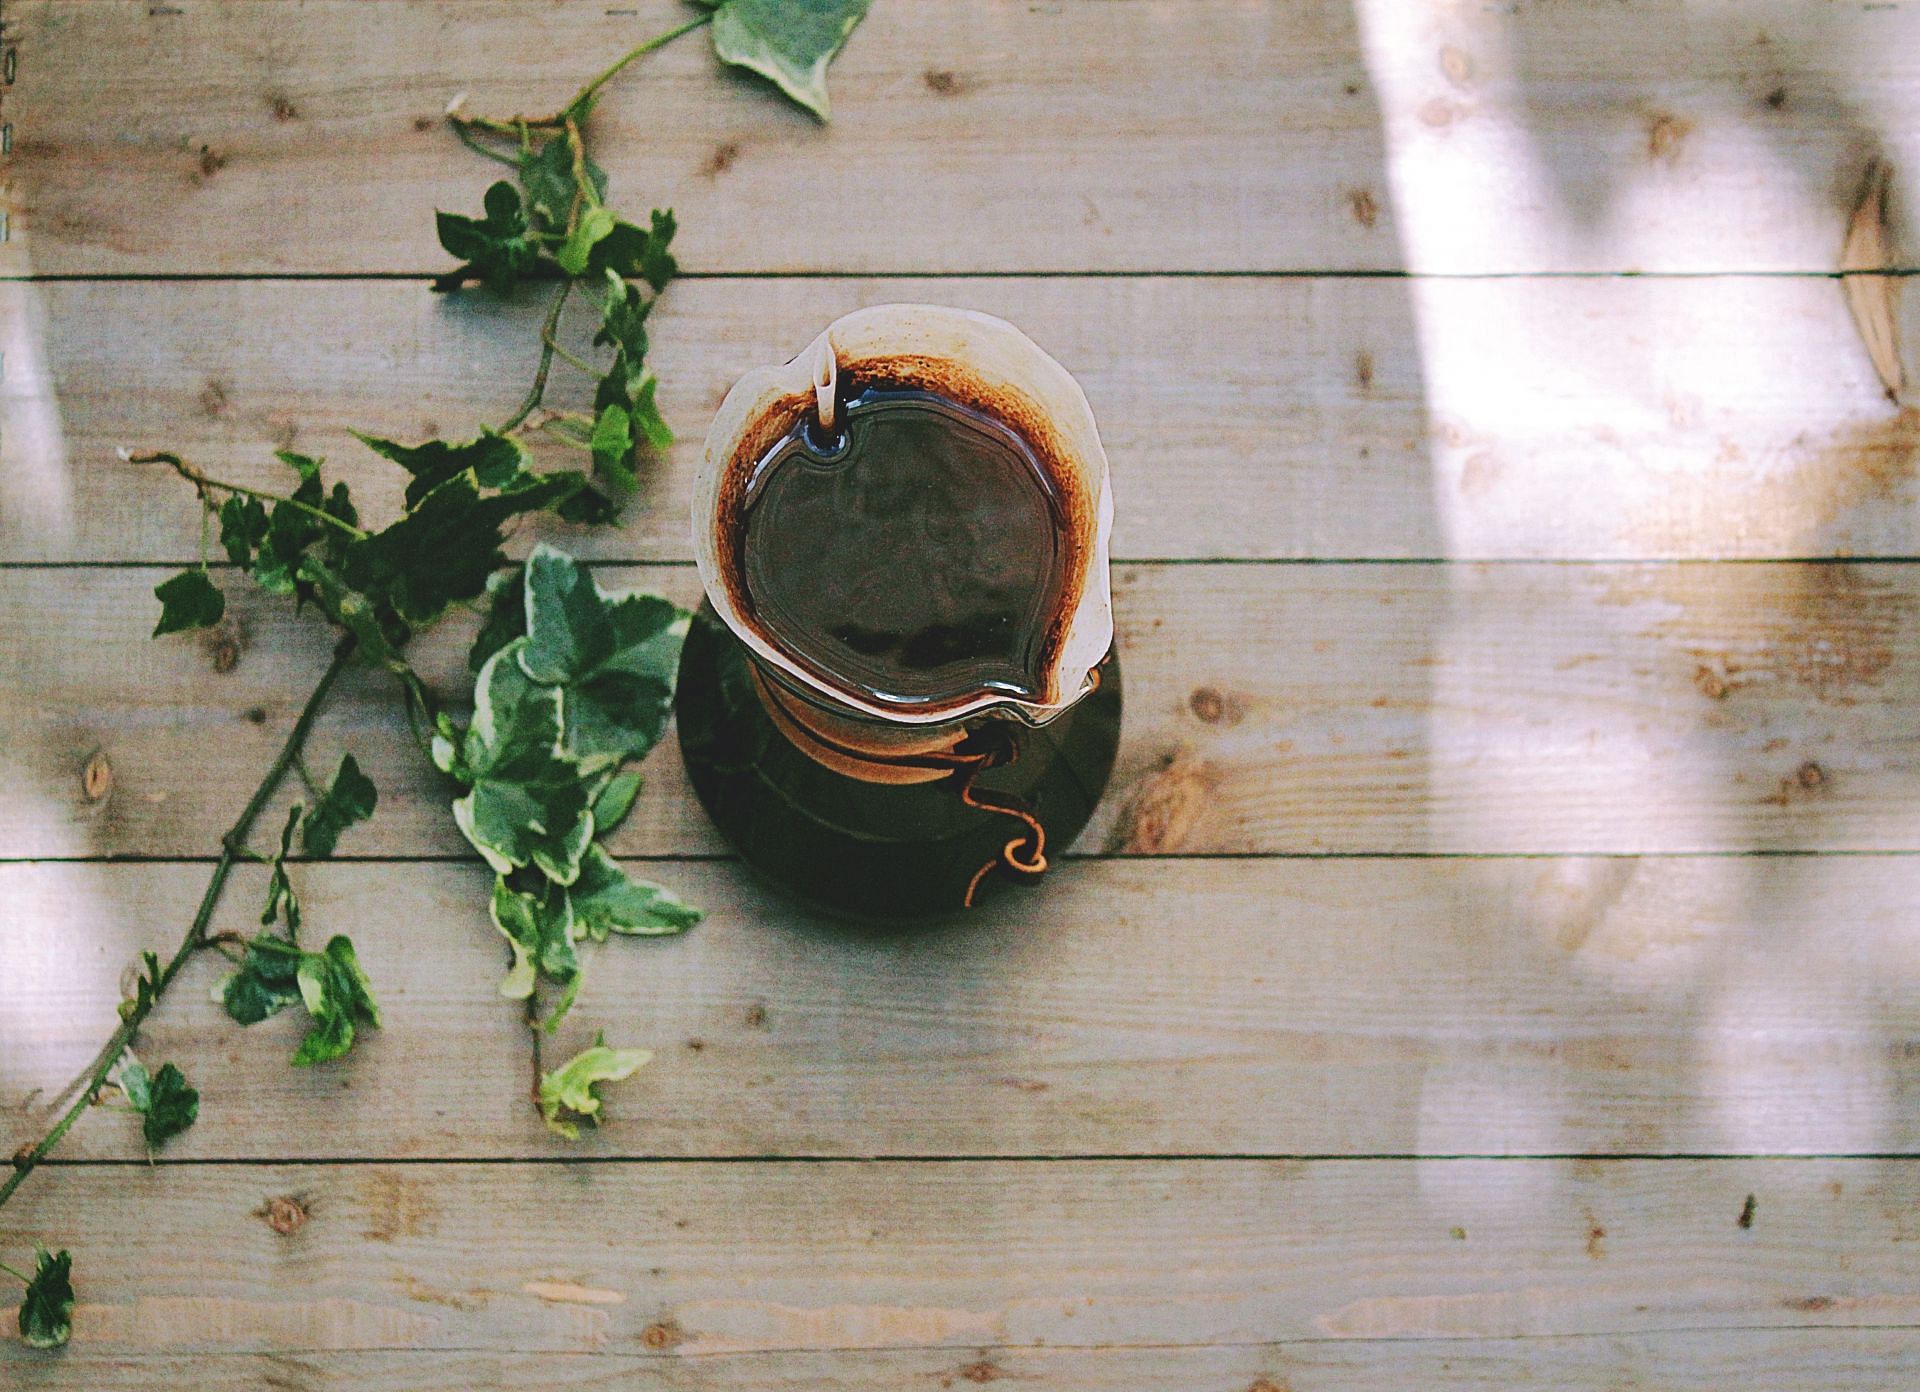 Dandelion coffee can protect the liver from oxidative stress (Image via Unsplash/Toa Heftiba)